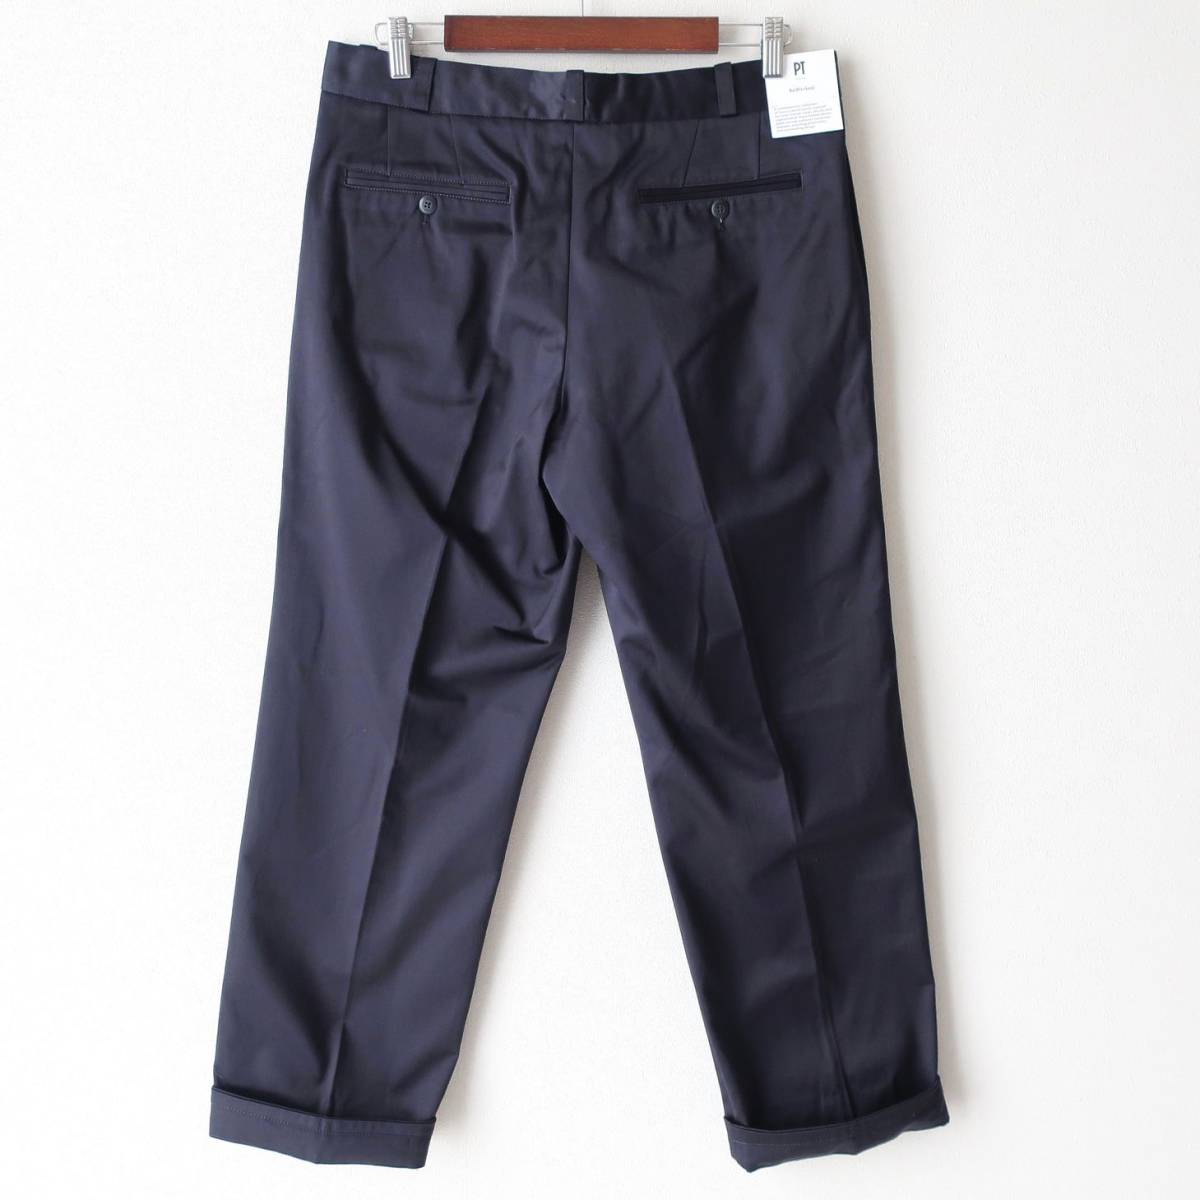  new goods unused PT TORINO men's fine quality chinos Italian pants slacks tapered pants PT01 dark blue dark navy W34 XL size 